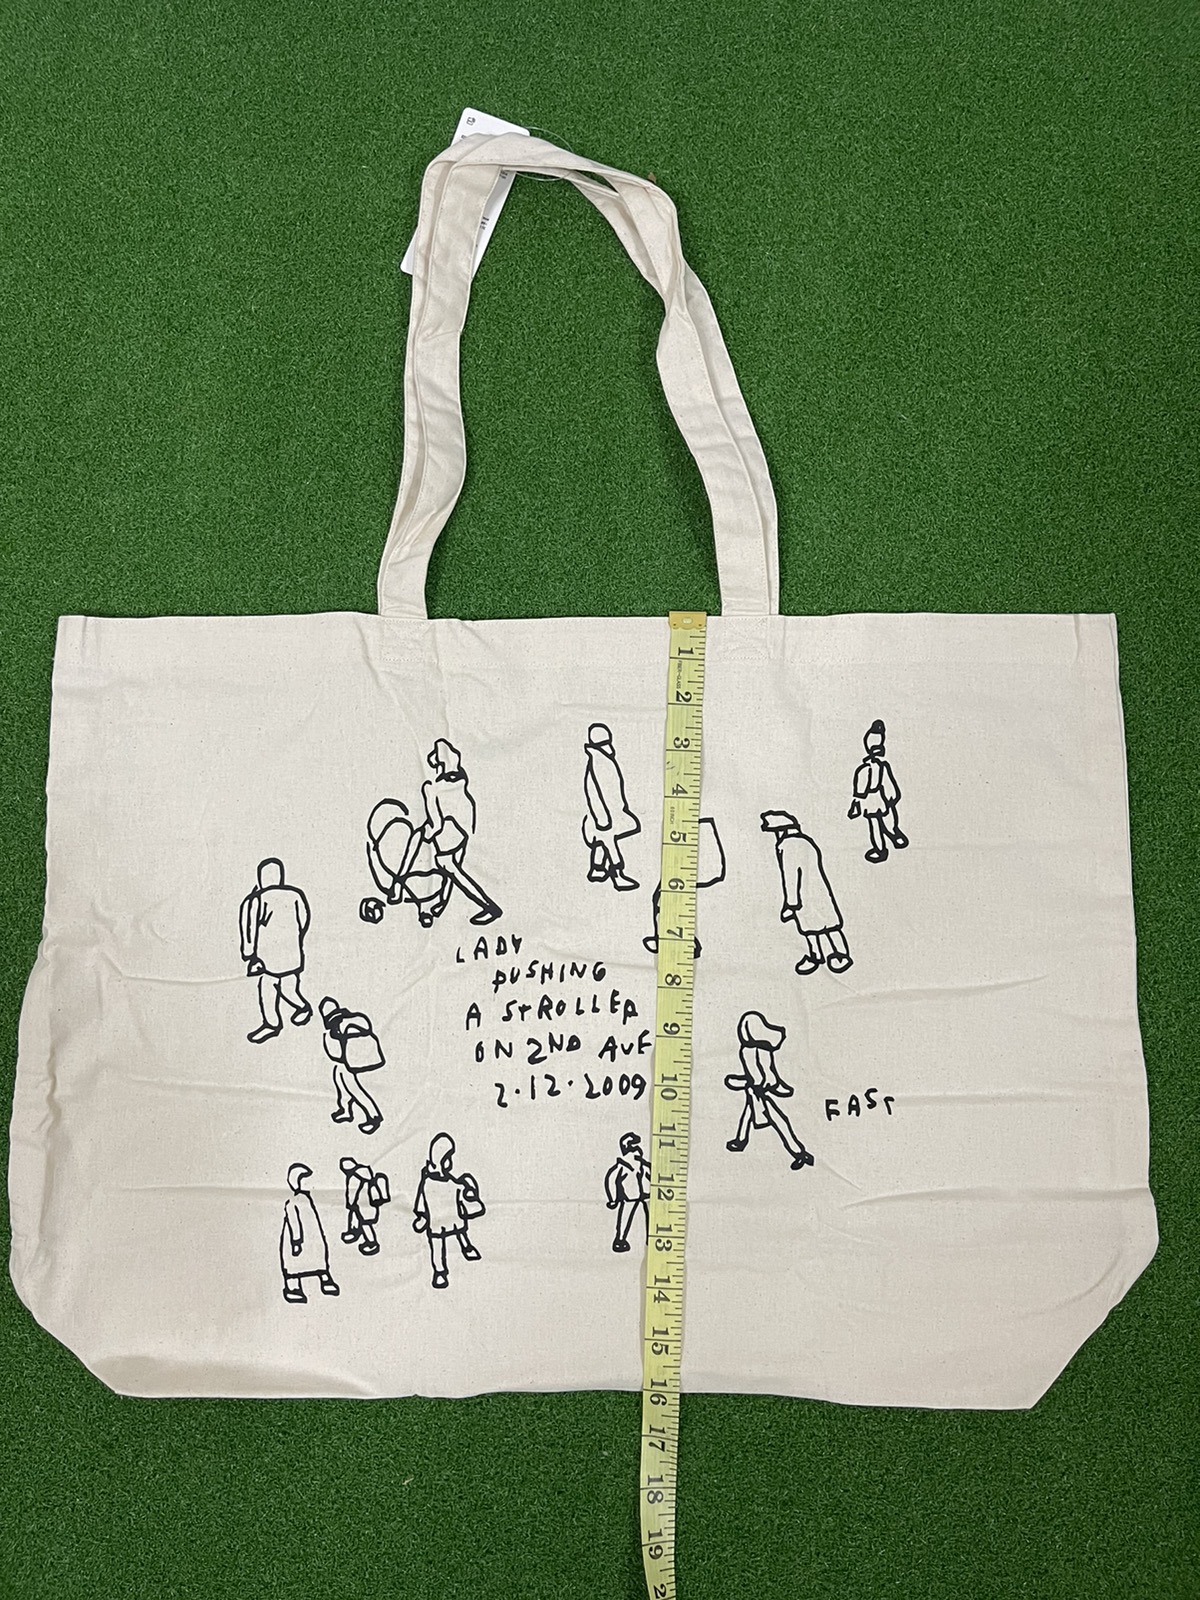 Jun Takahashi - New Jason Polan Tote Bag Limited Edition / Uniqlo / Eva - 9